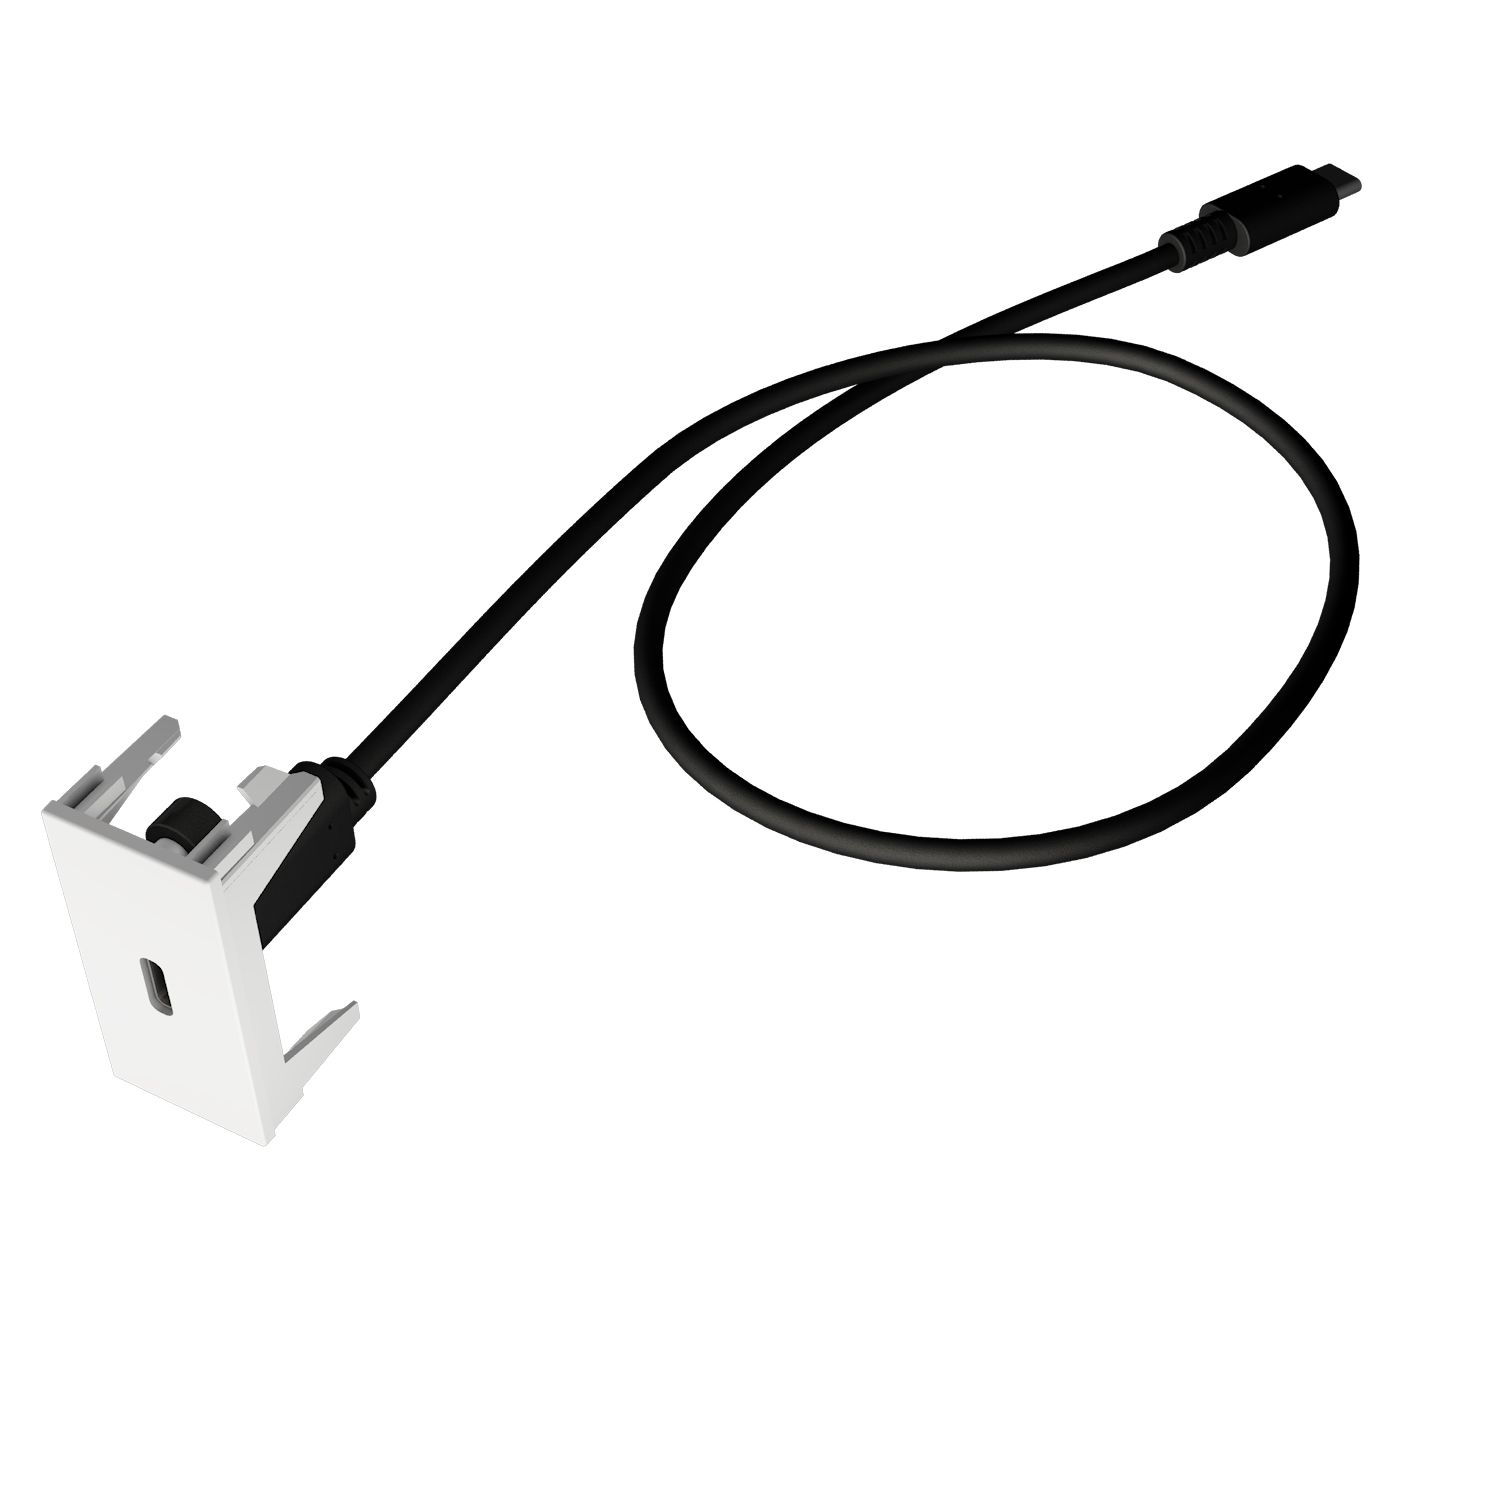 Kindermann Konnect flex 45 click Anschlussblende USB C 3.1 (f/f) - Halblbende - Weiß